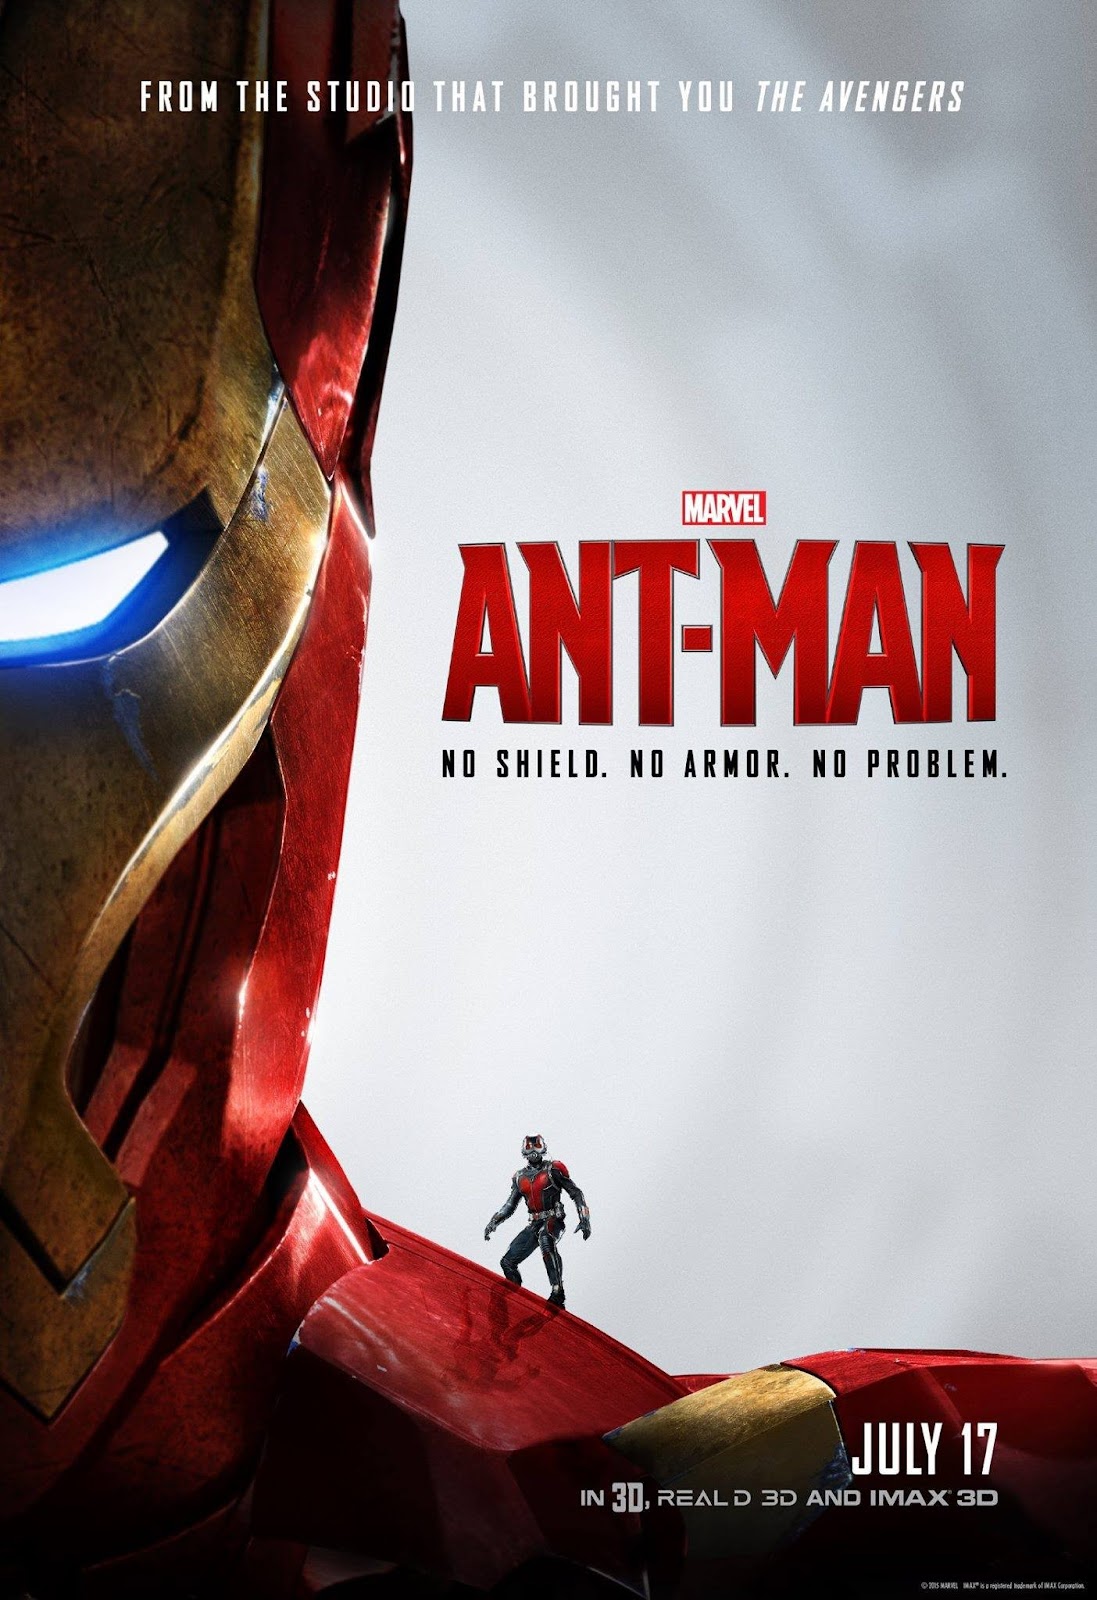 http://2.bp.blogspot.com/-y-rRk6660N8/VXnXnUEwzbI/AAAAAAAD4r0/eJ1AlbHUV9o/s1600/Ant-Man-Ironman-Poster.jpg